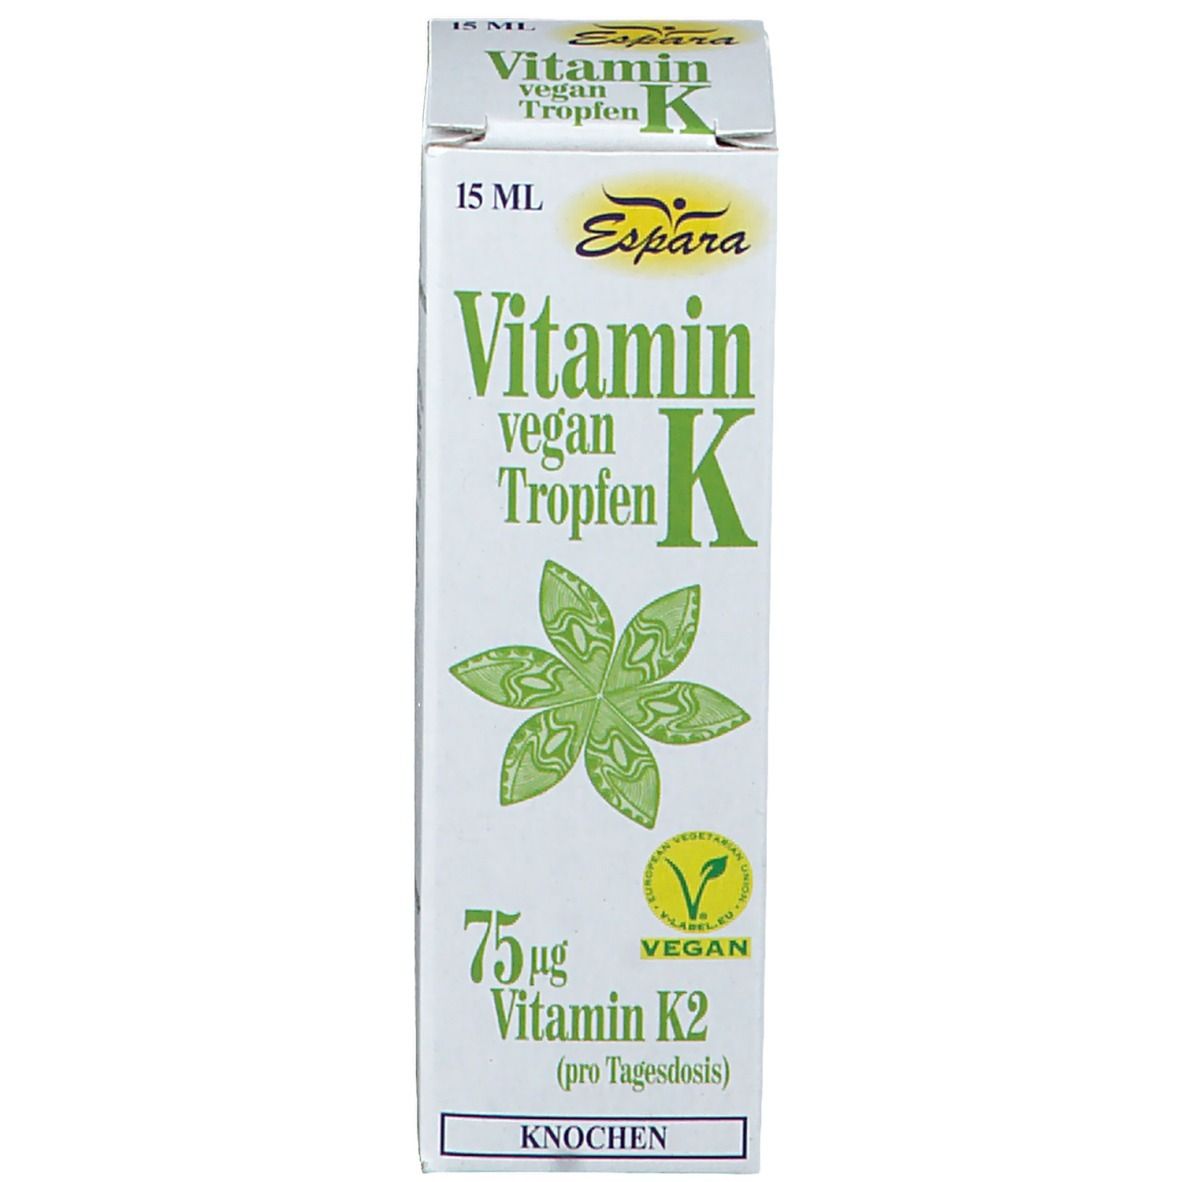 Vitamin K Tropfen